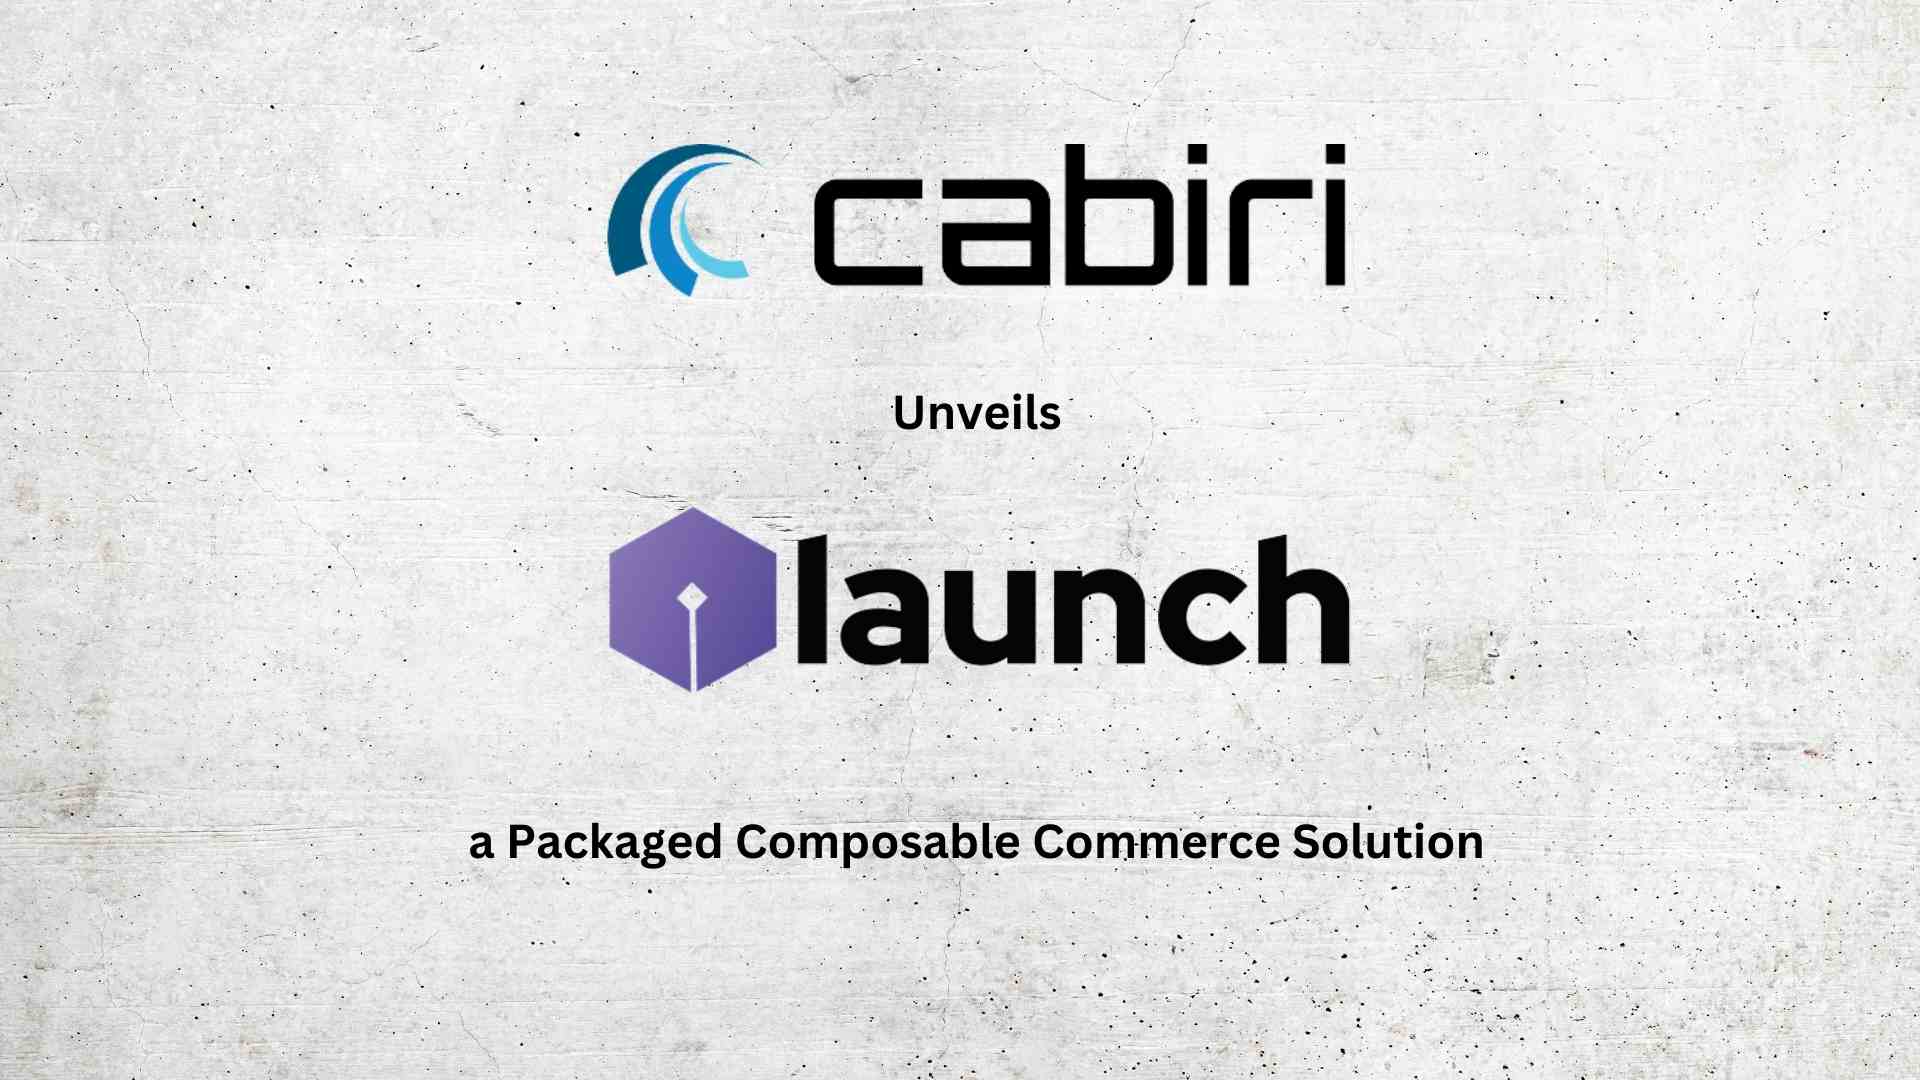 Cabiri unveils Launch, a packaged composable commerce solution for fast-growing enterprises